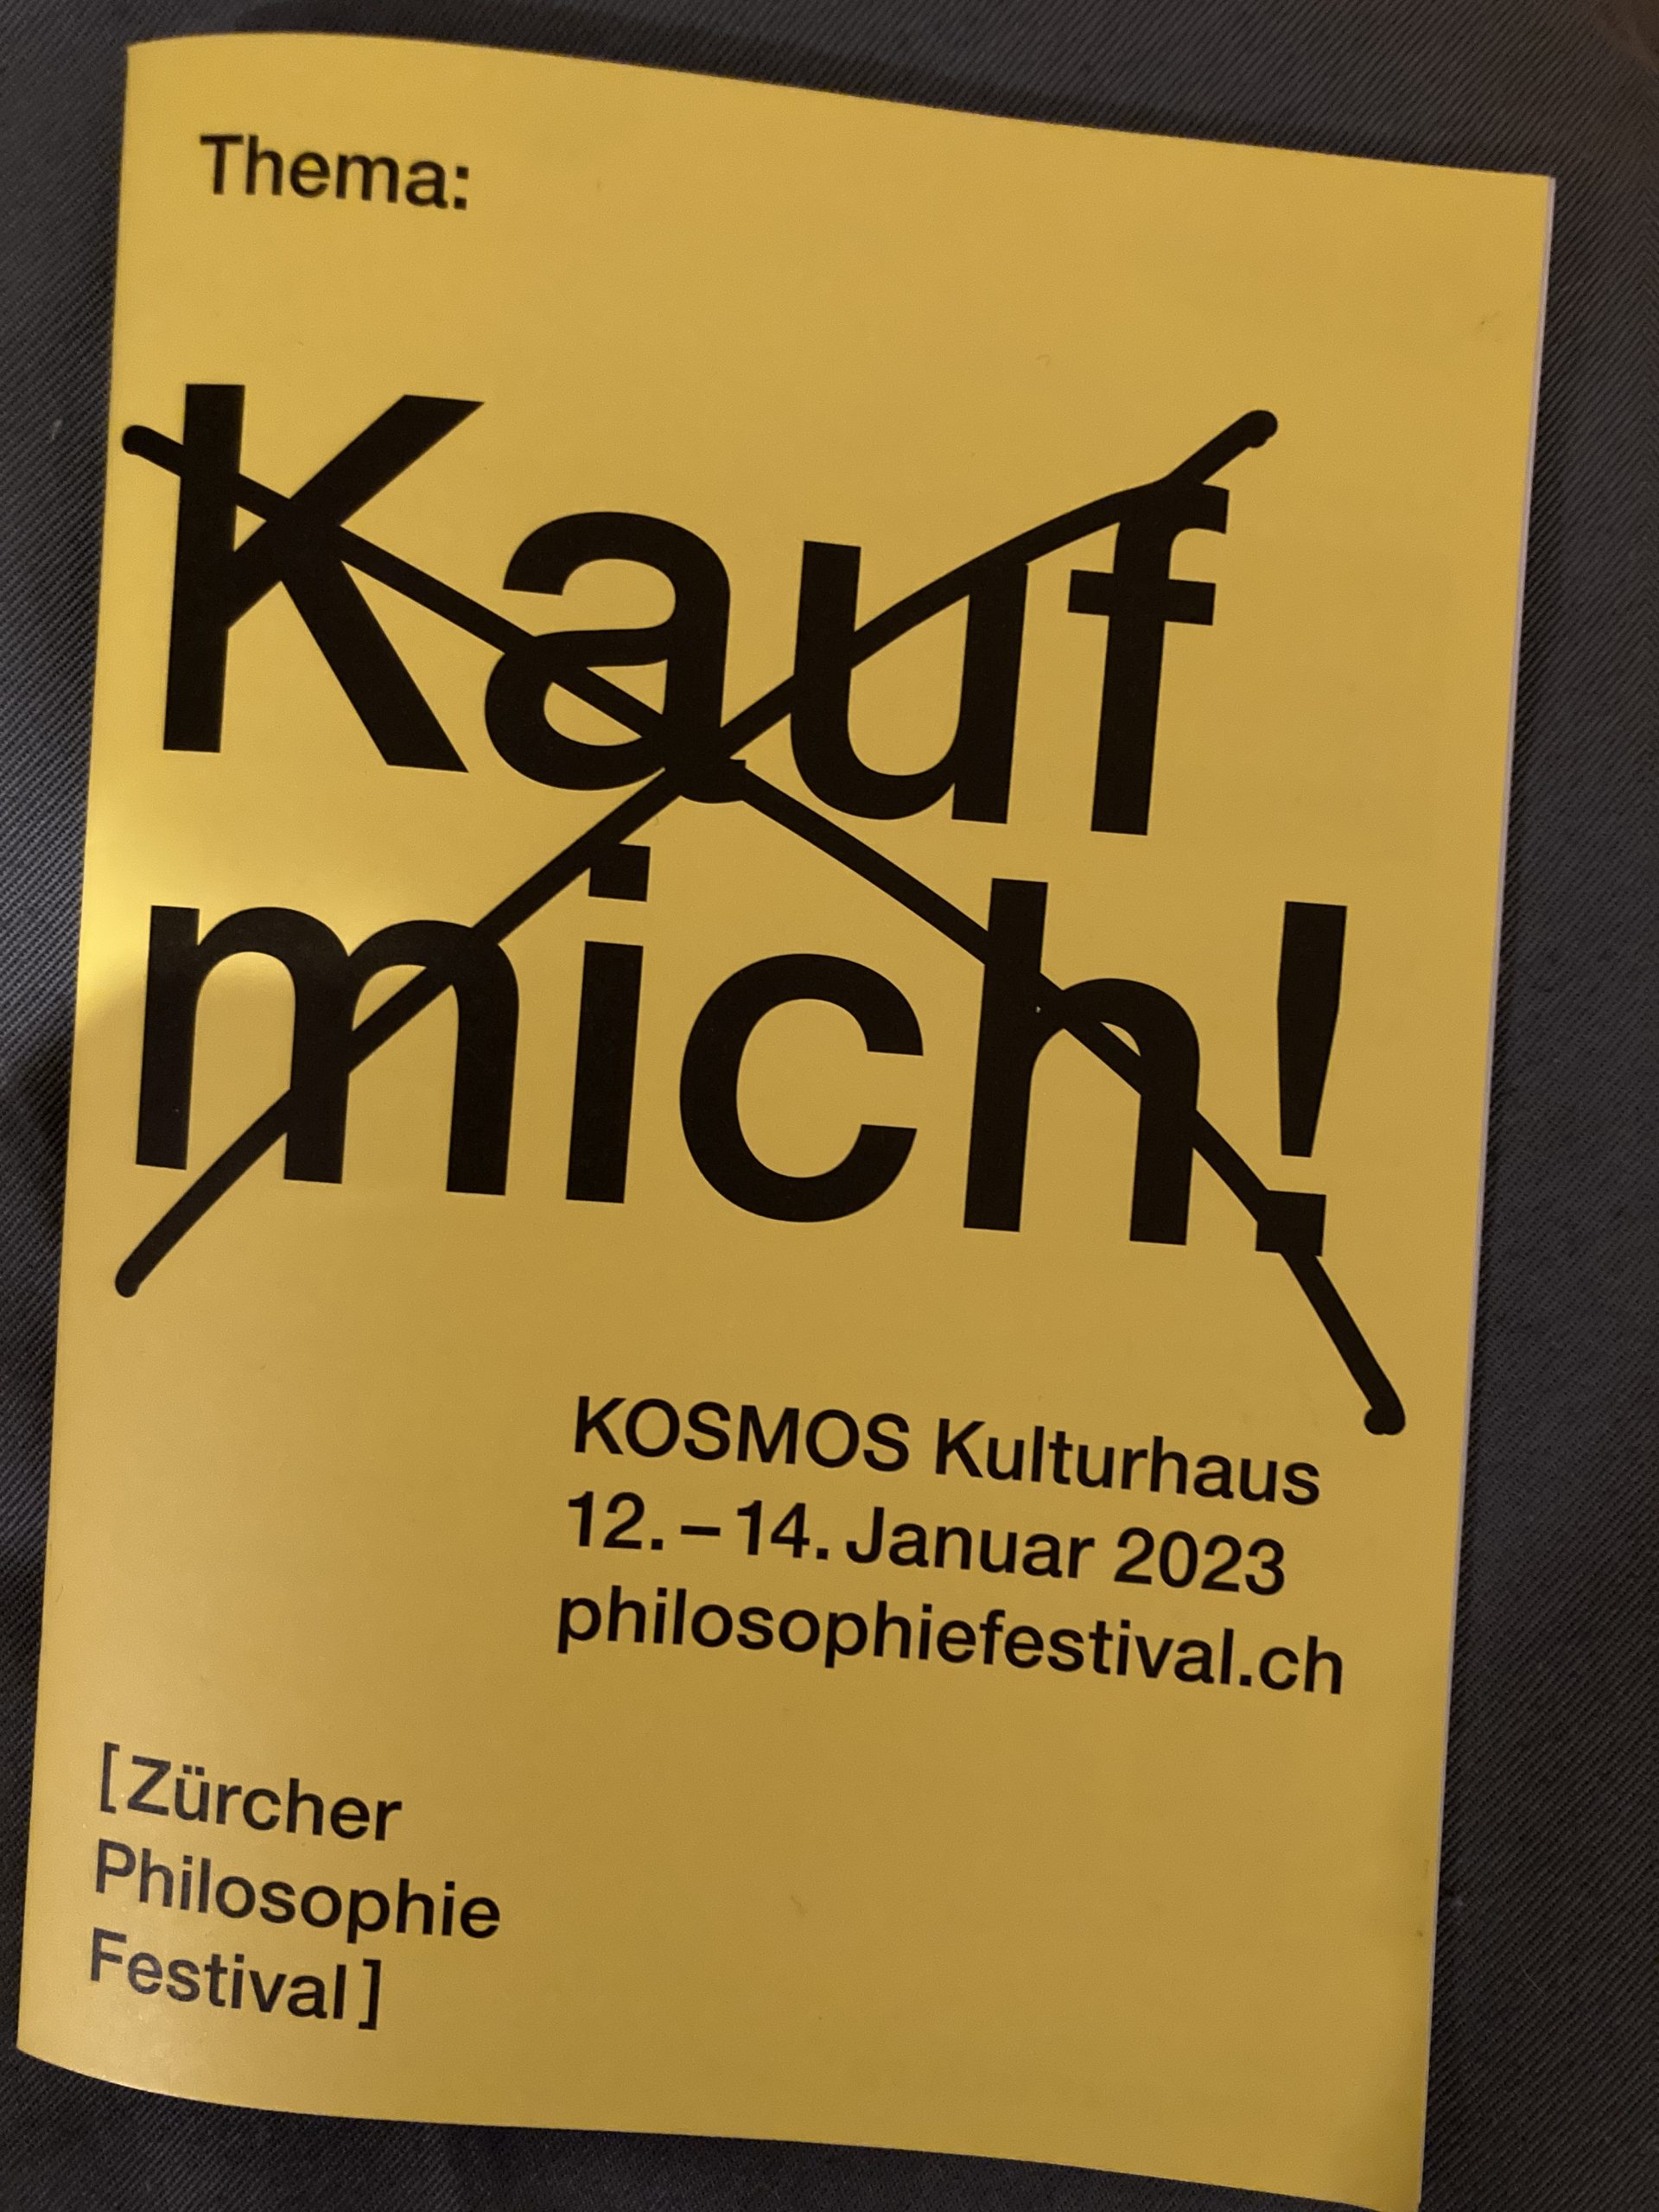 Zürcher Philosophie Festival